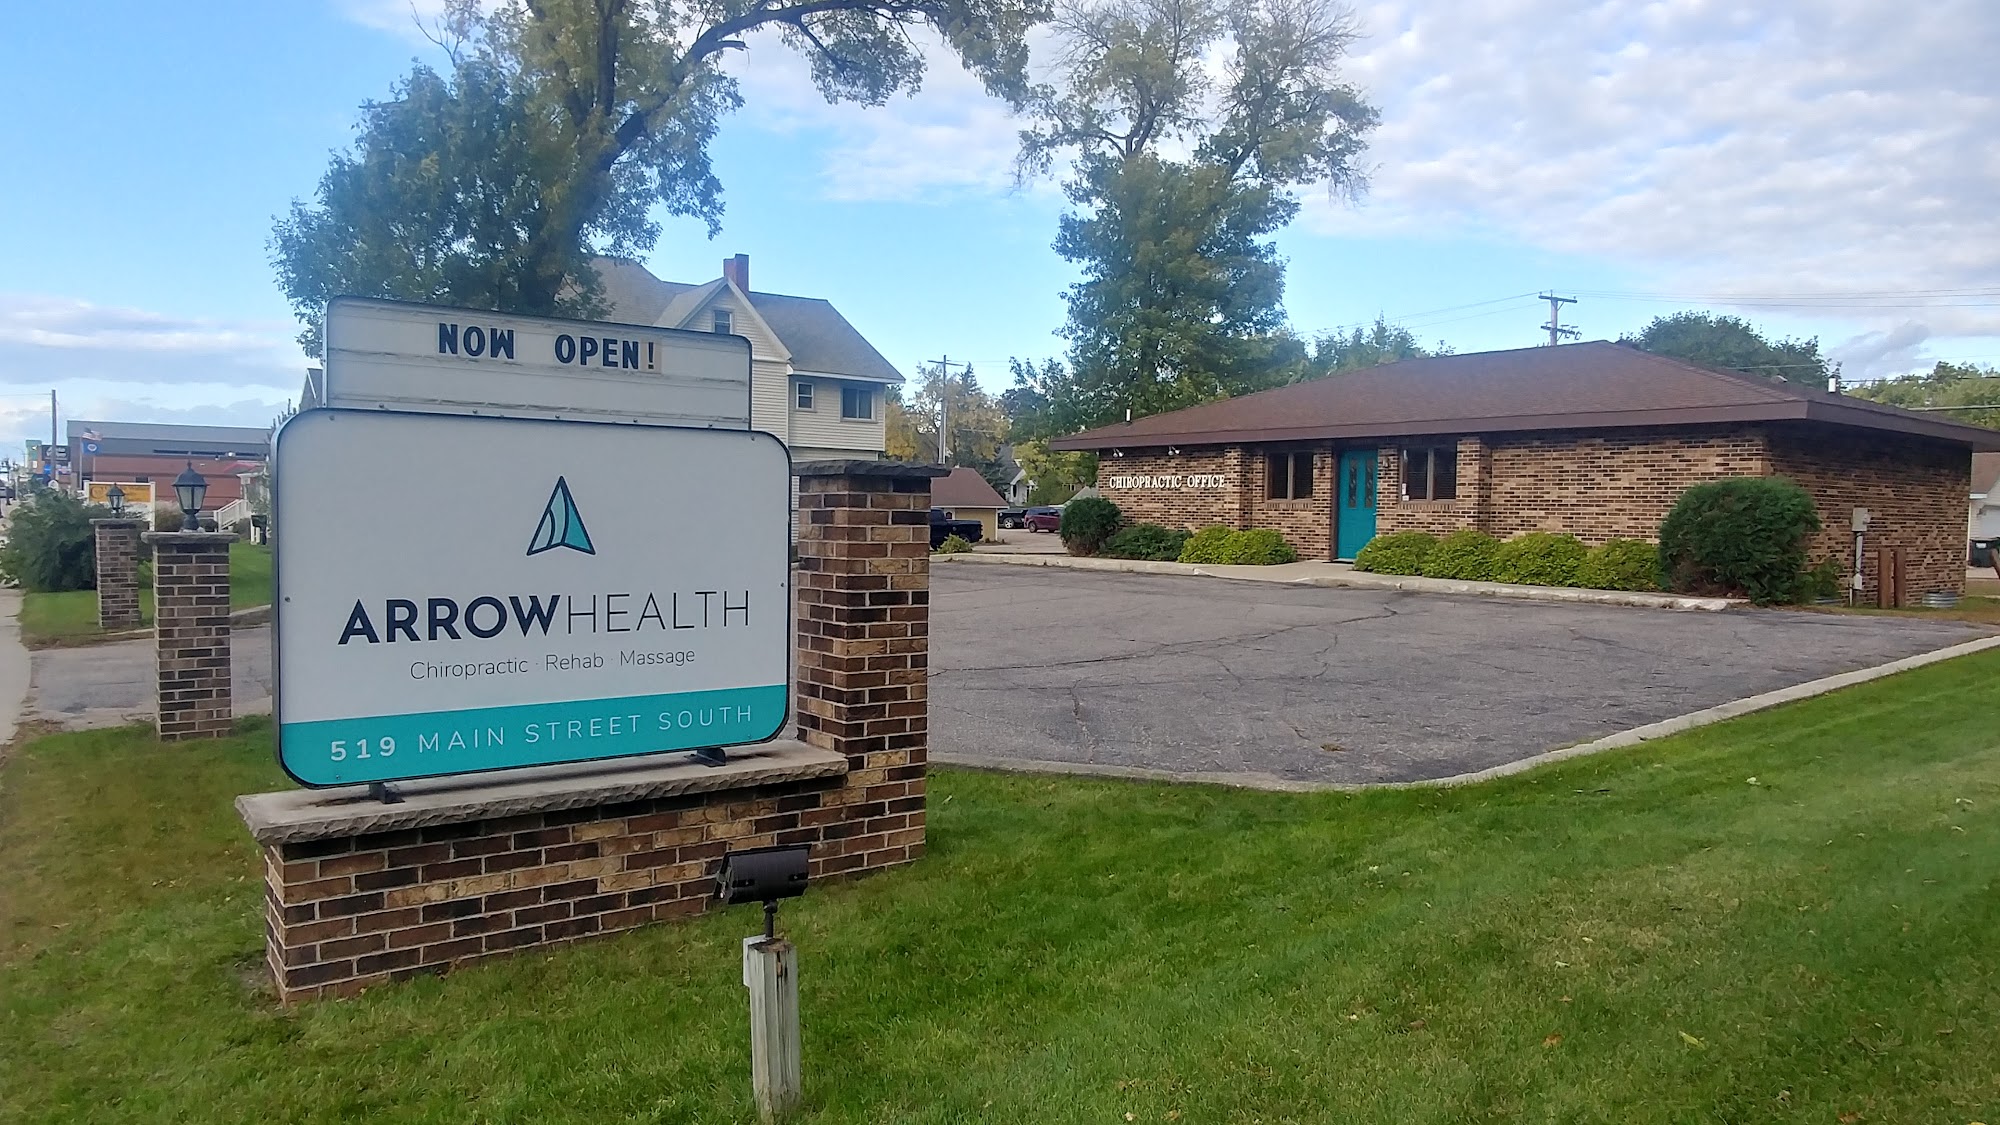 Arrow Health 519 Main St S, Sauk Centre Minnesota 56378